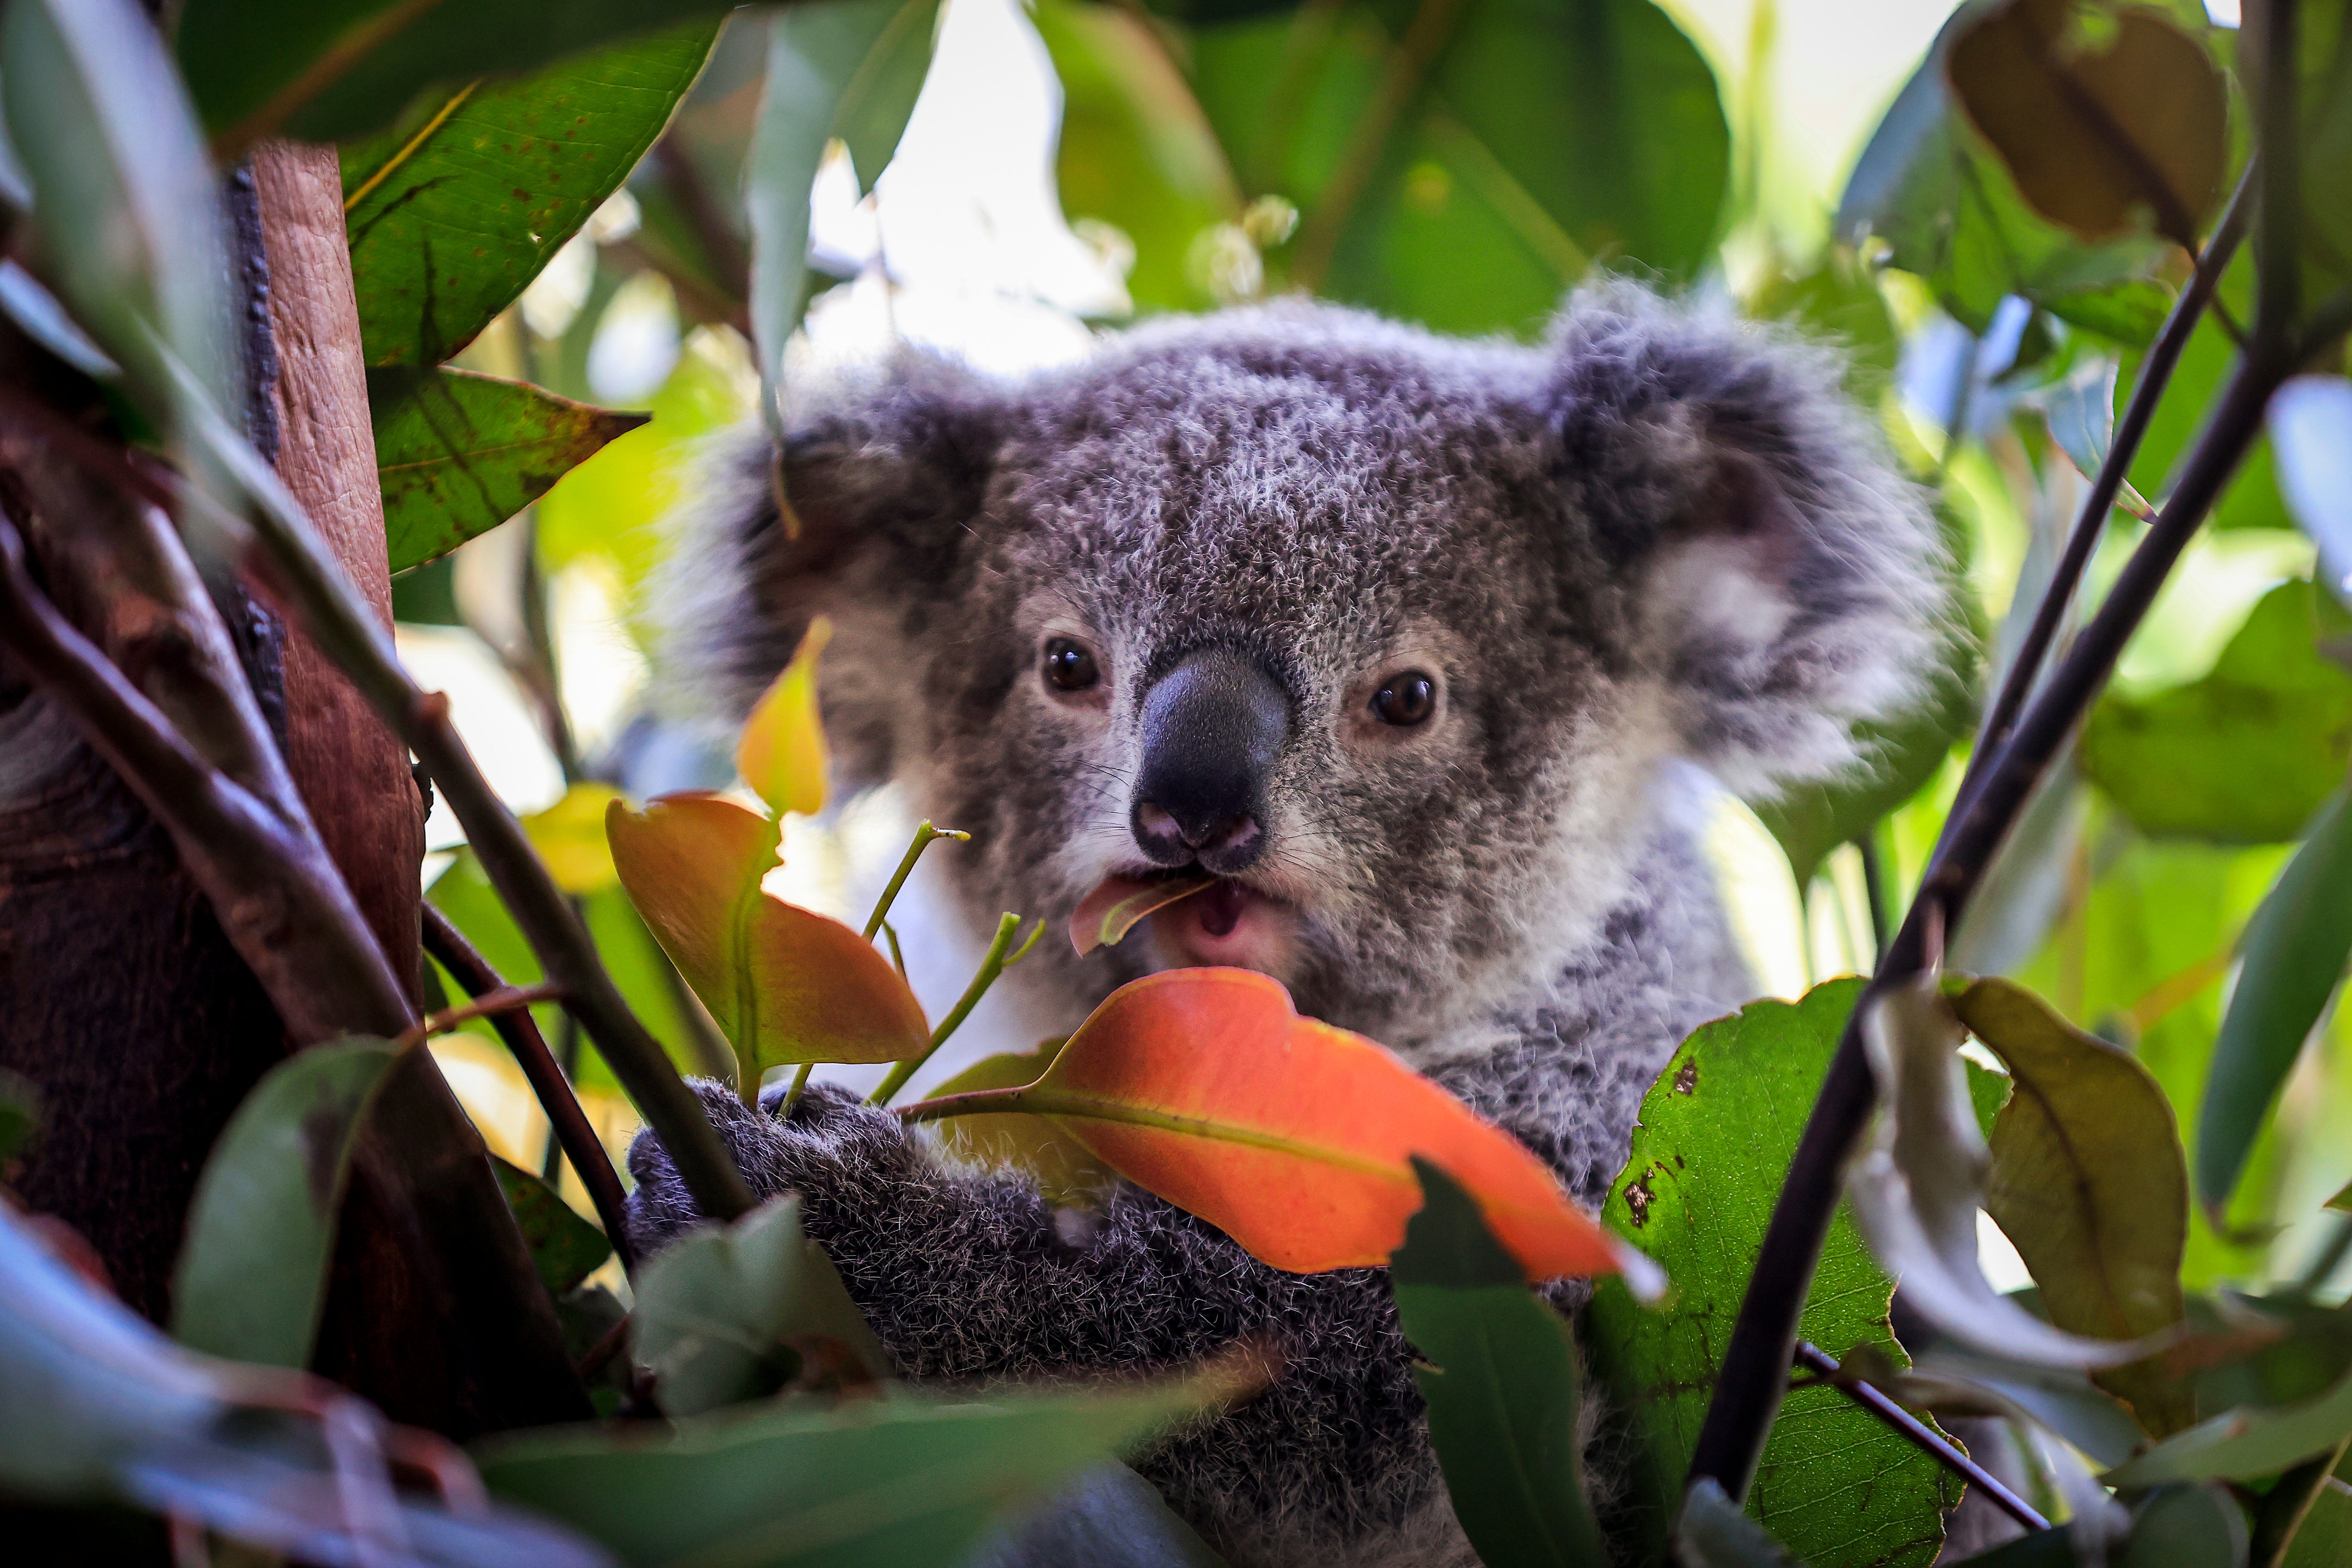 A baby koala is seen at Wild Life Sydney Zoo on October 14, 2021 in Sydney, Australia